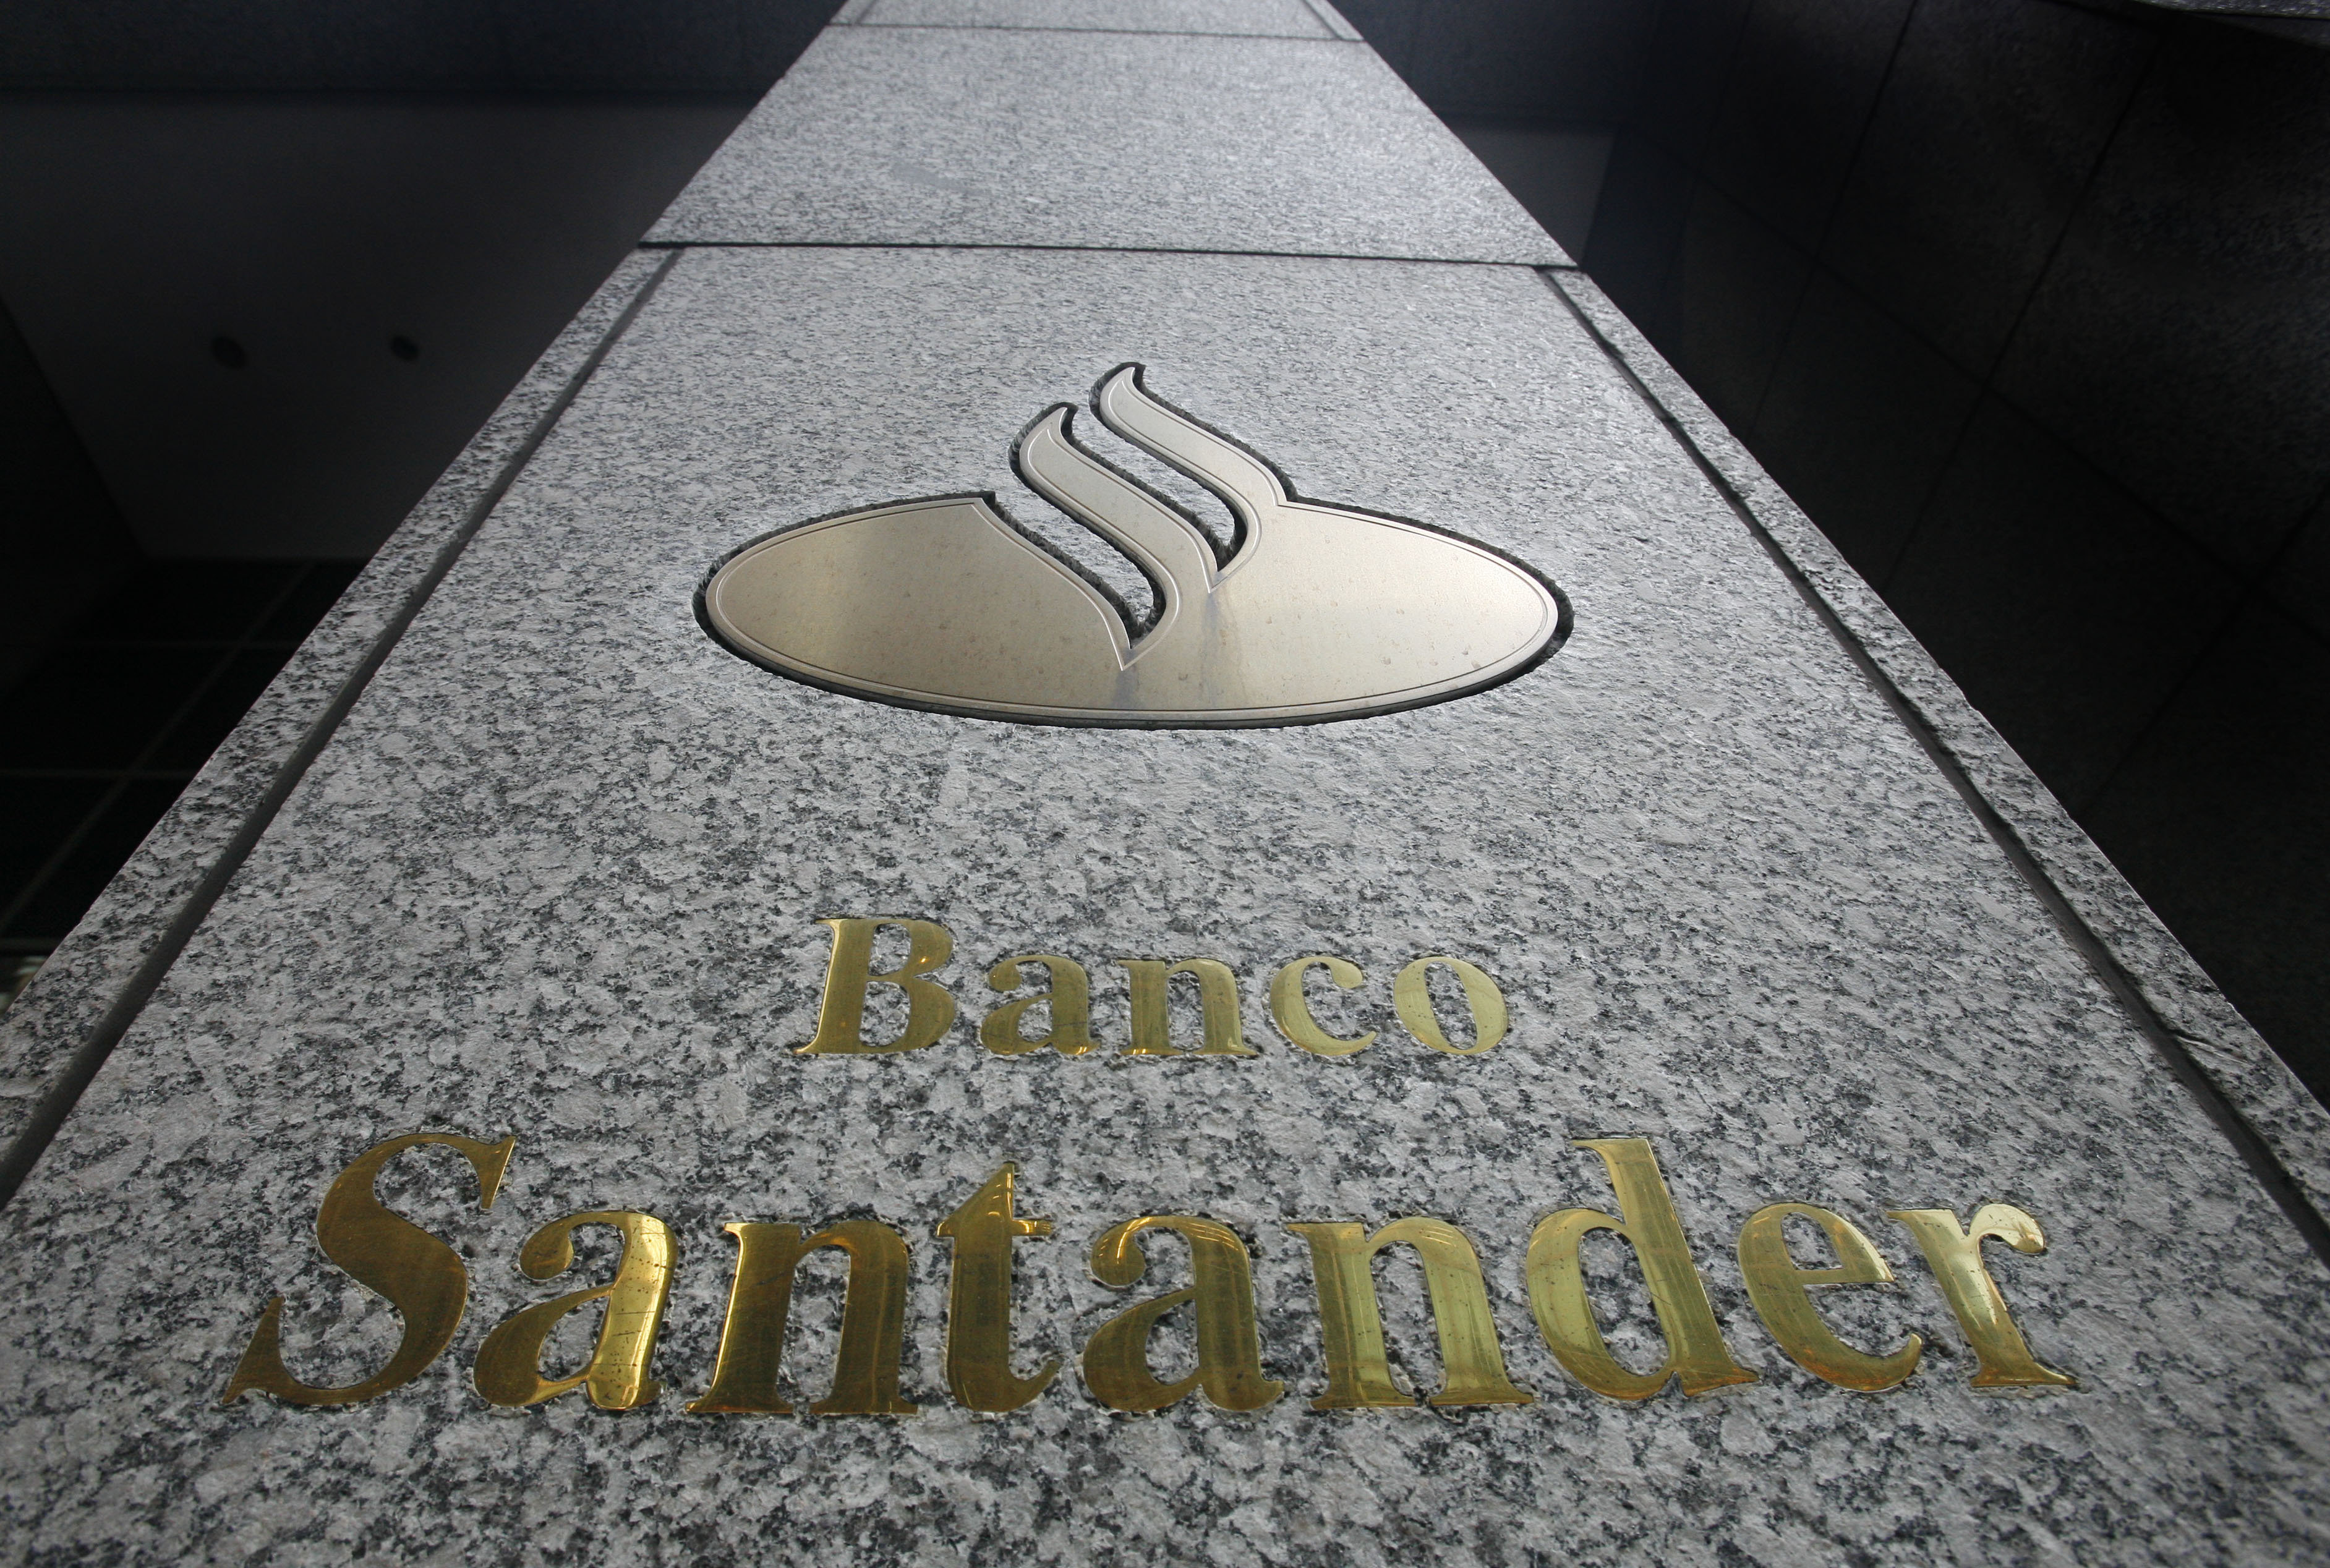 H Βanco Santander εξαγοράζει την Banco Popular έναντι ενός ευρώ